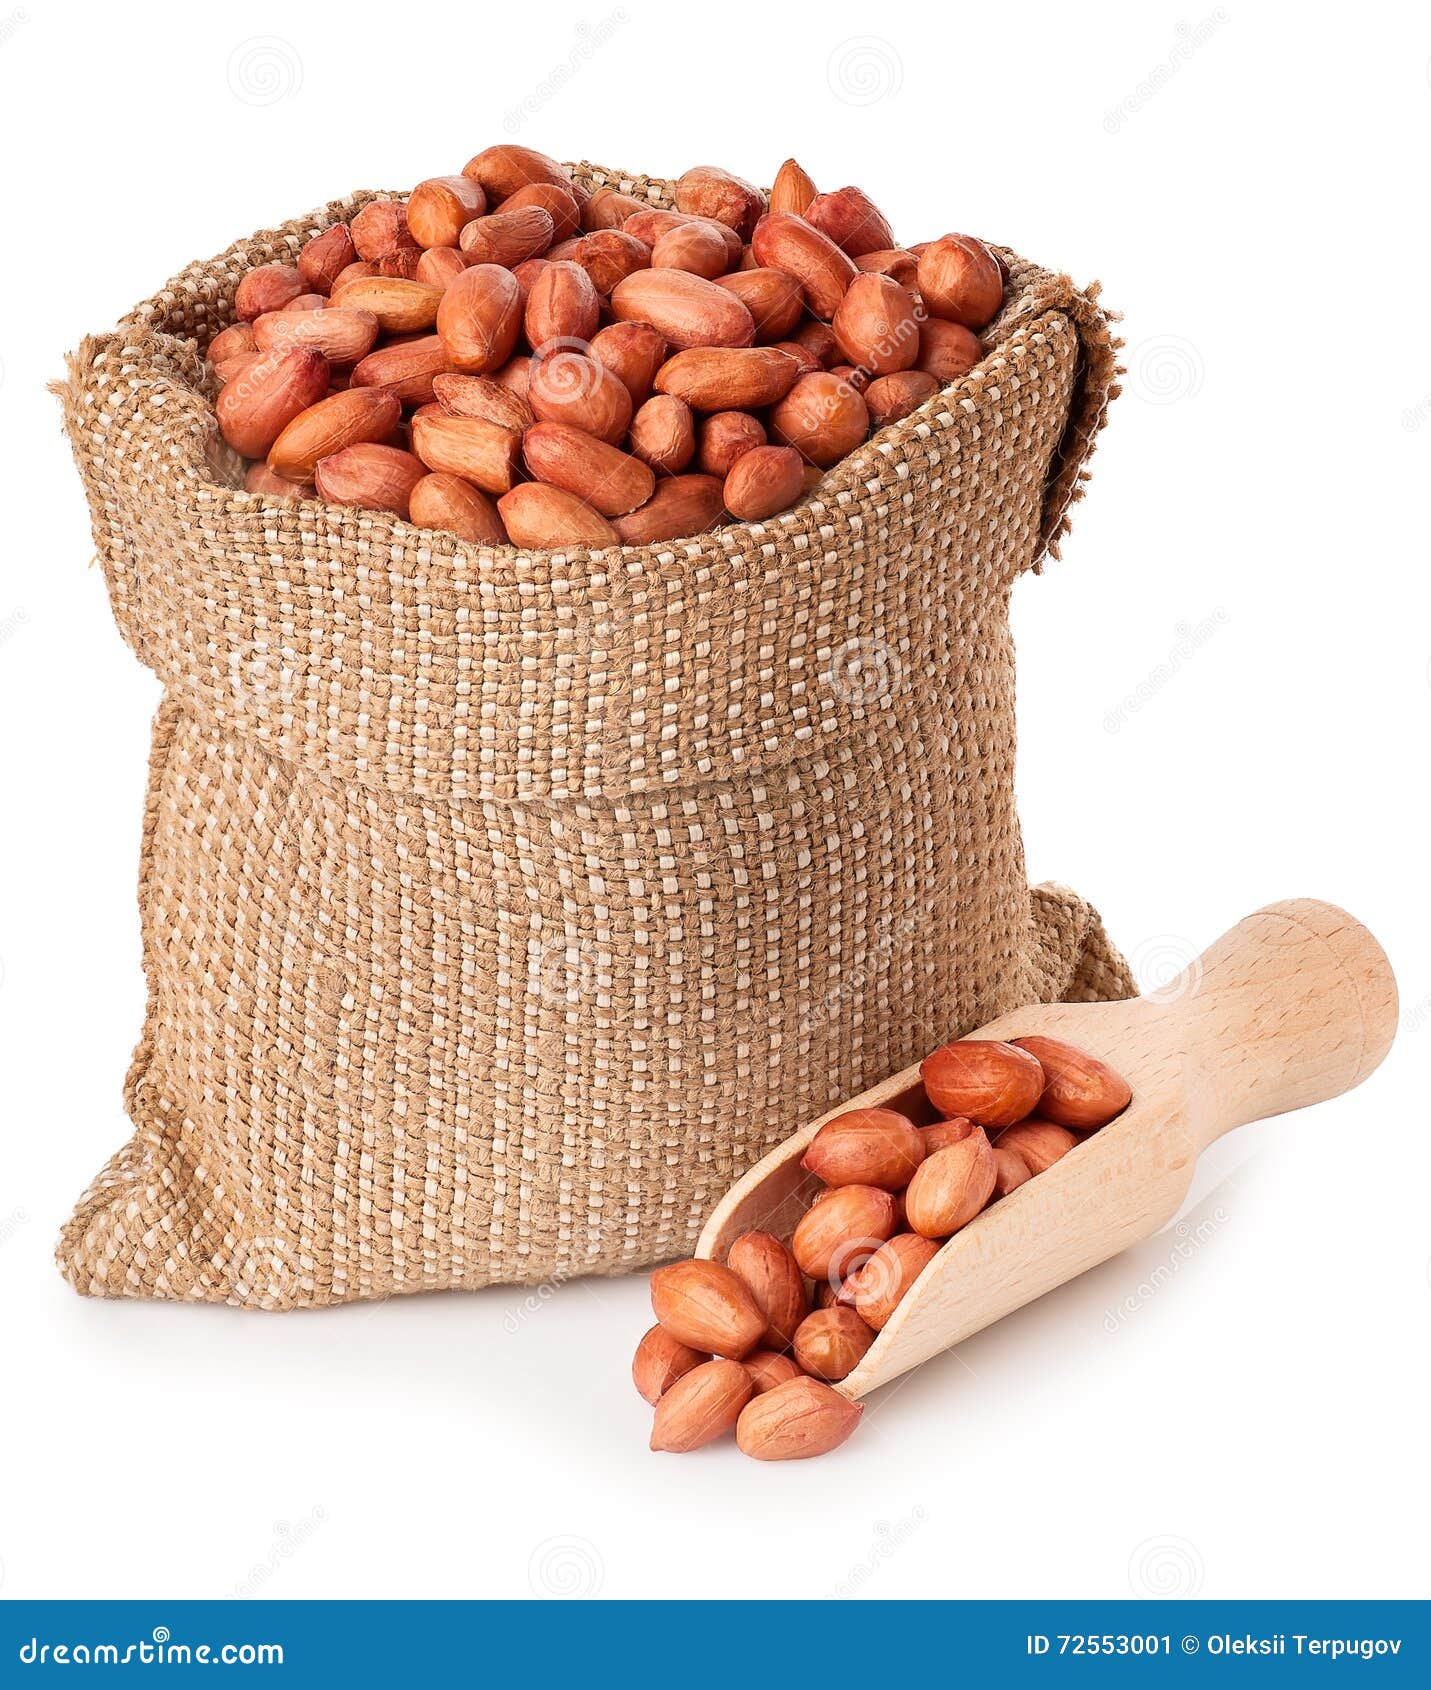 Deep Fried Peanuts - 5lb bag - The Peanut Trading Company